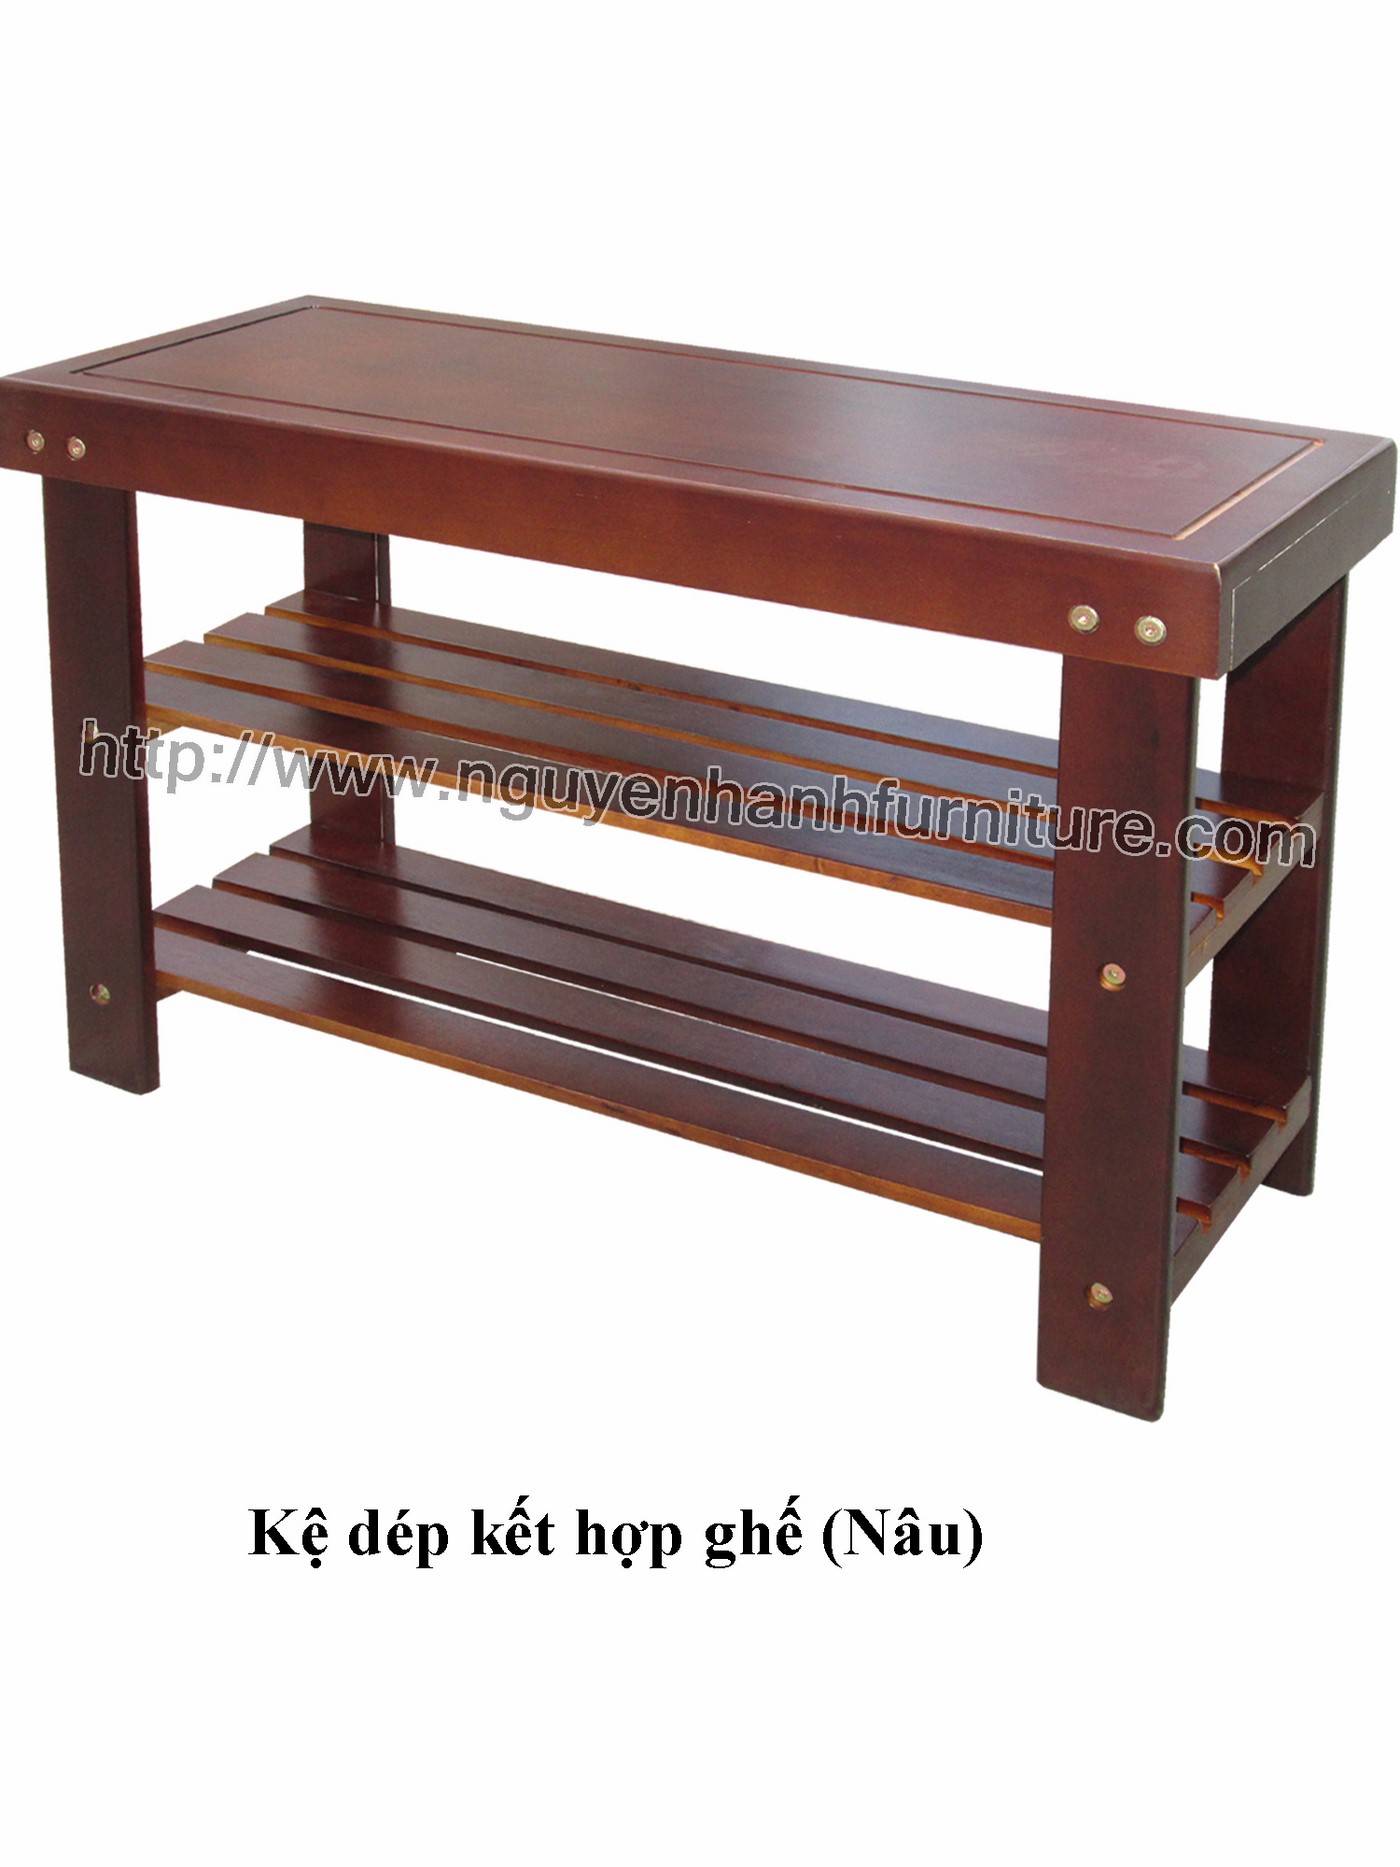 Name product: Shoe shelf with sitting place - Brown Color - Dimensions: 70 x 45 x 27 cm - Description: Wood natural rubber